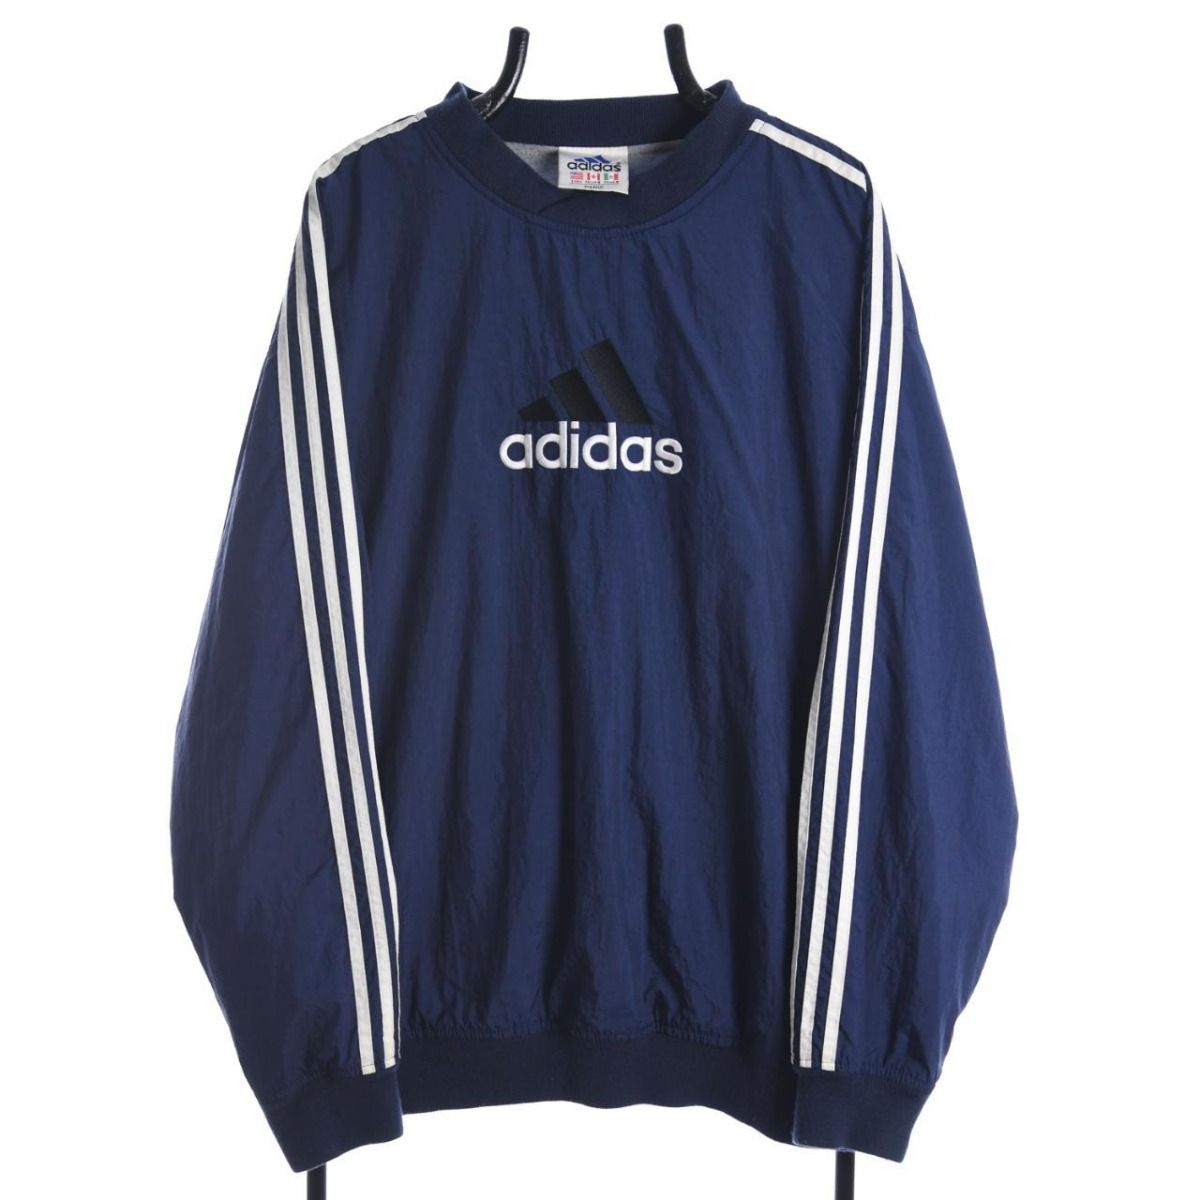 Adidas 1990s Shell Crewneck Pullover